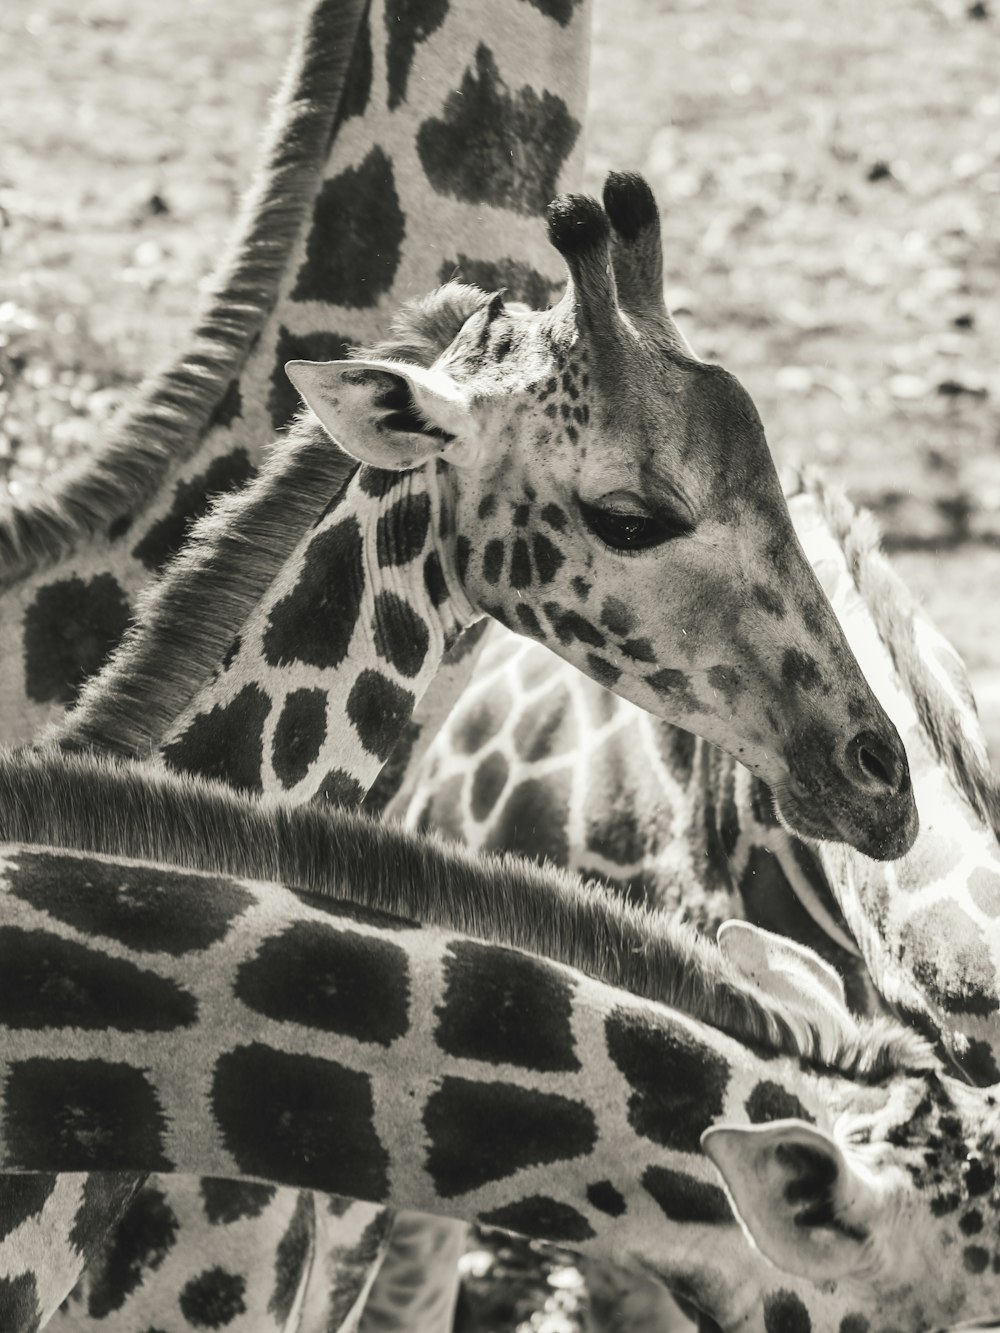 a baby giraffe nursing from its mother